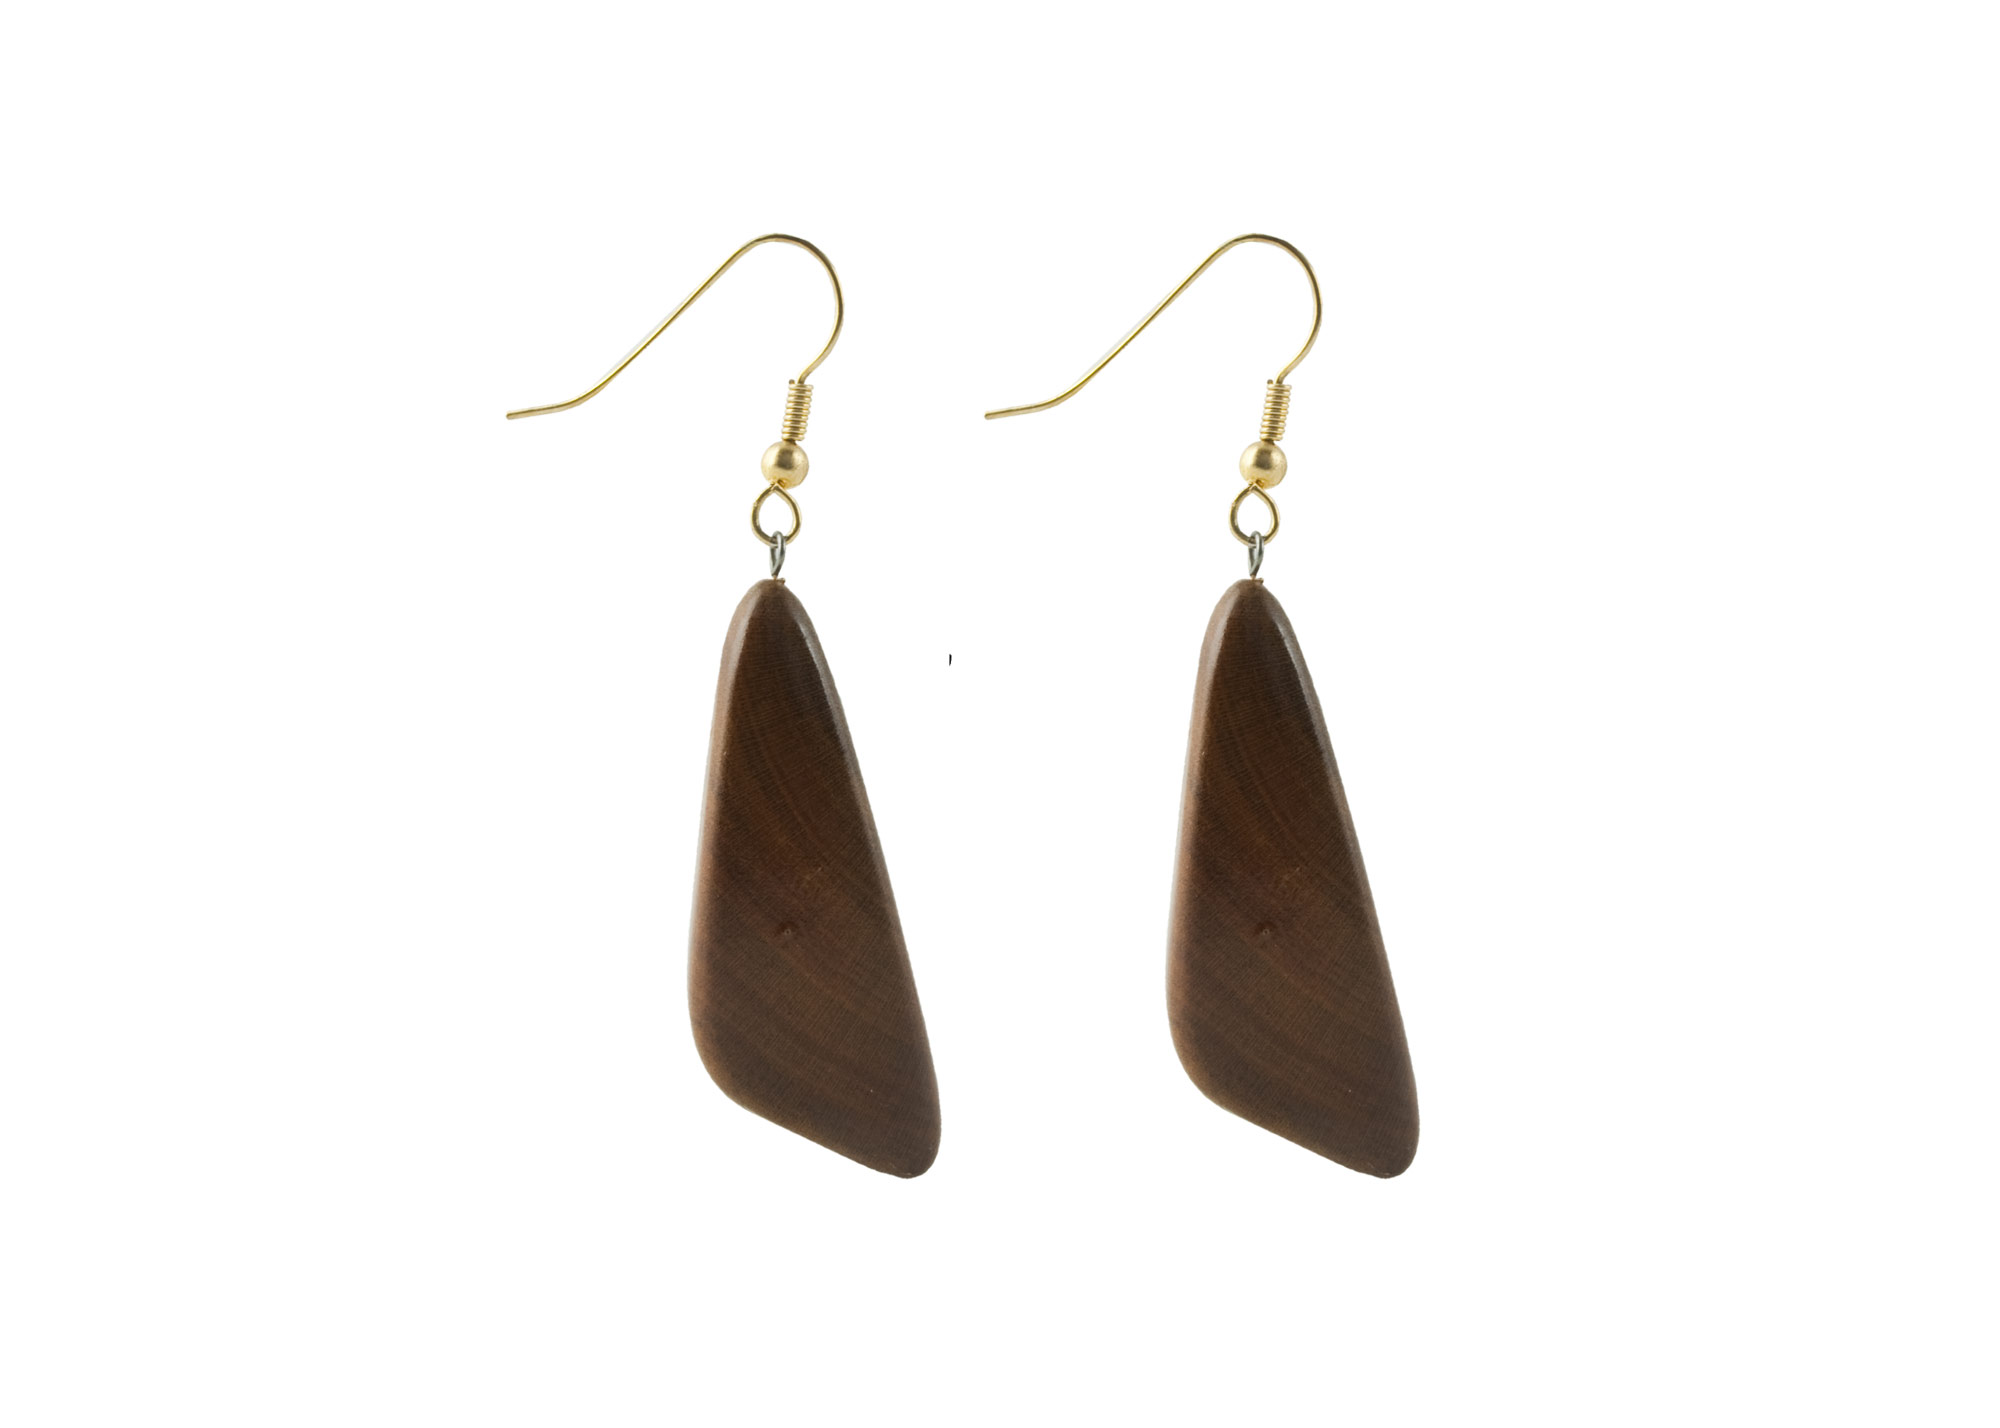 Buy Black Sea Wooden Earrings Asymmetrical  at GoldenCockerel.com